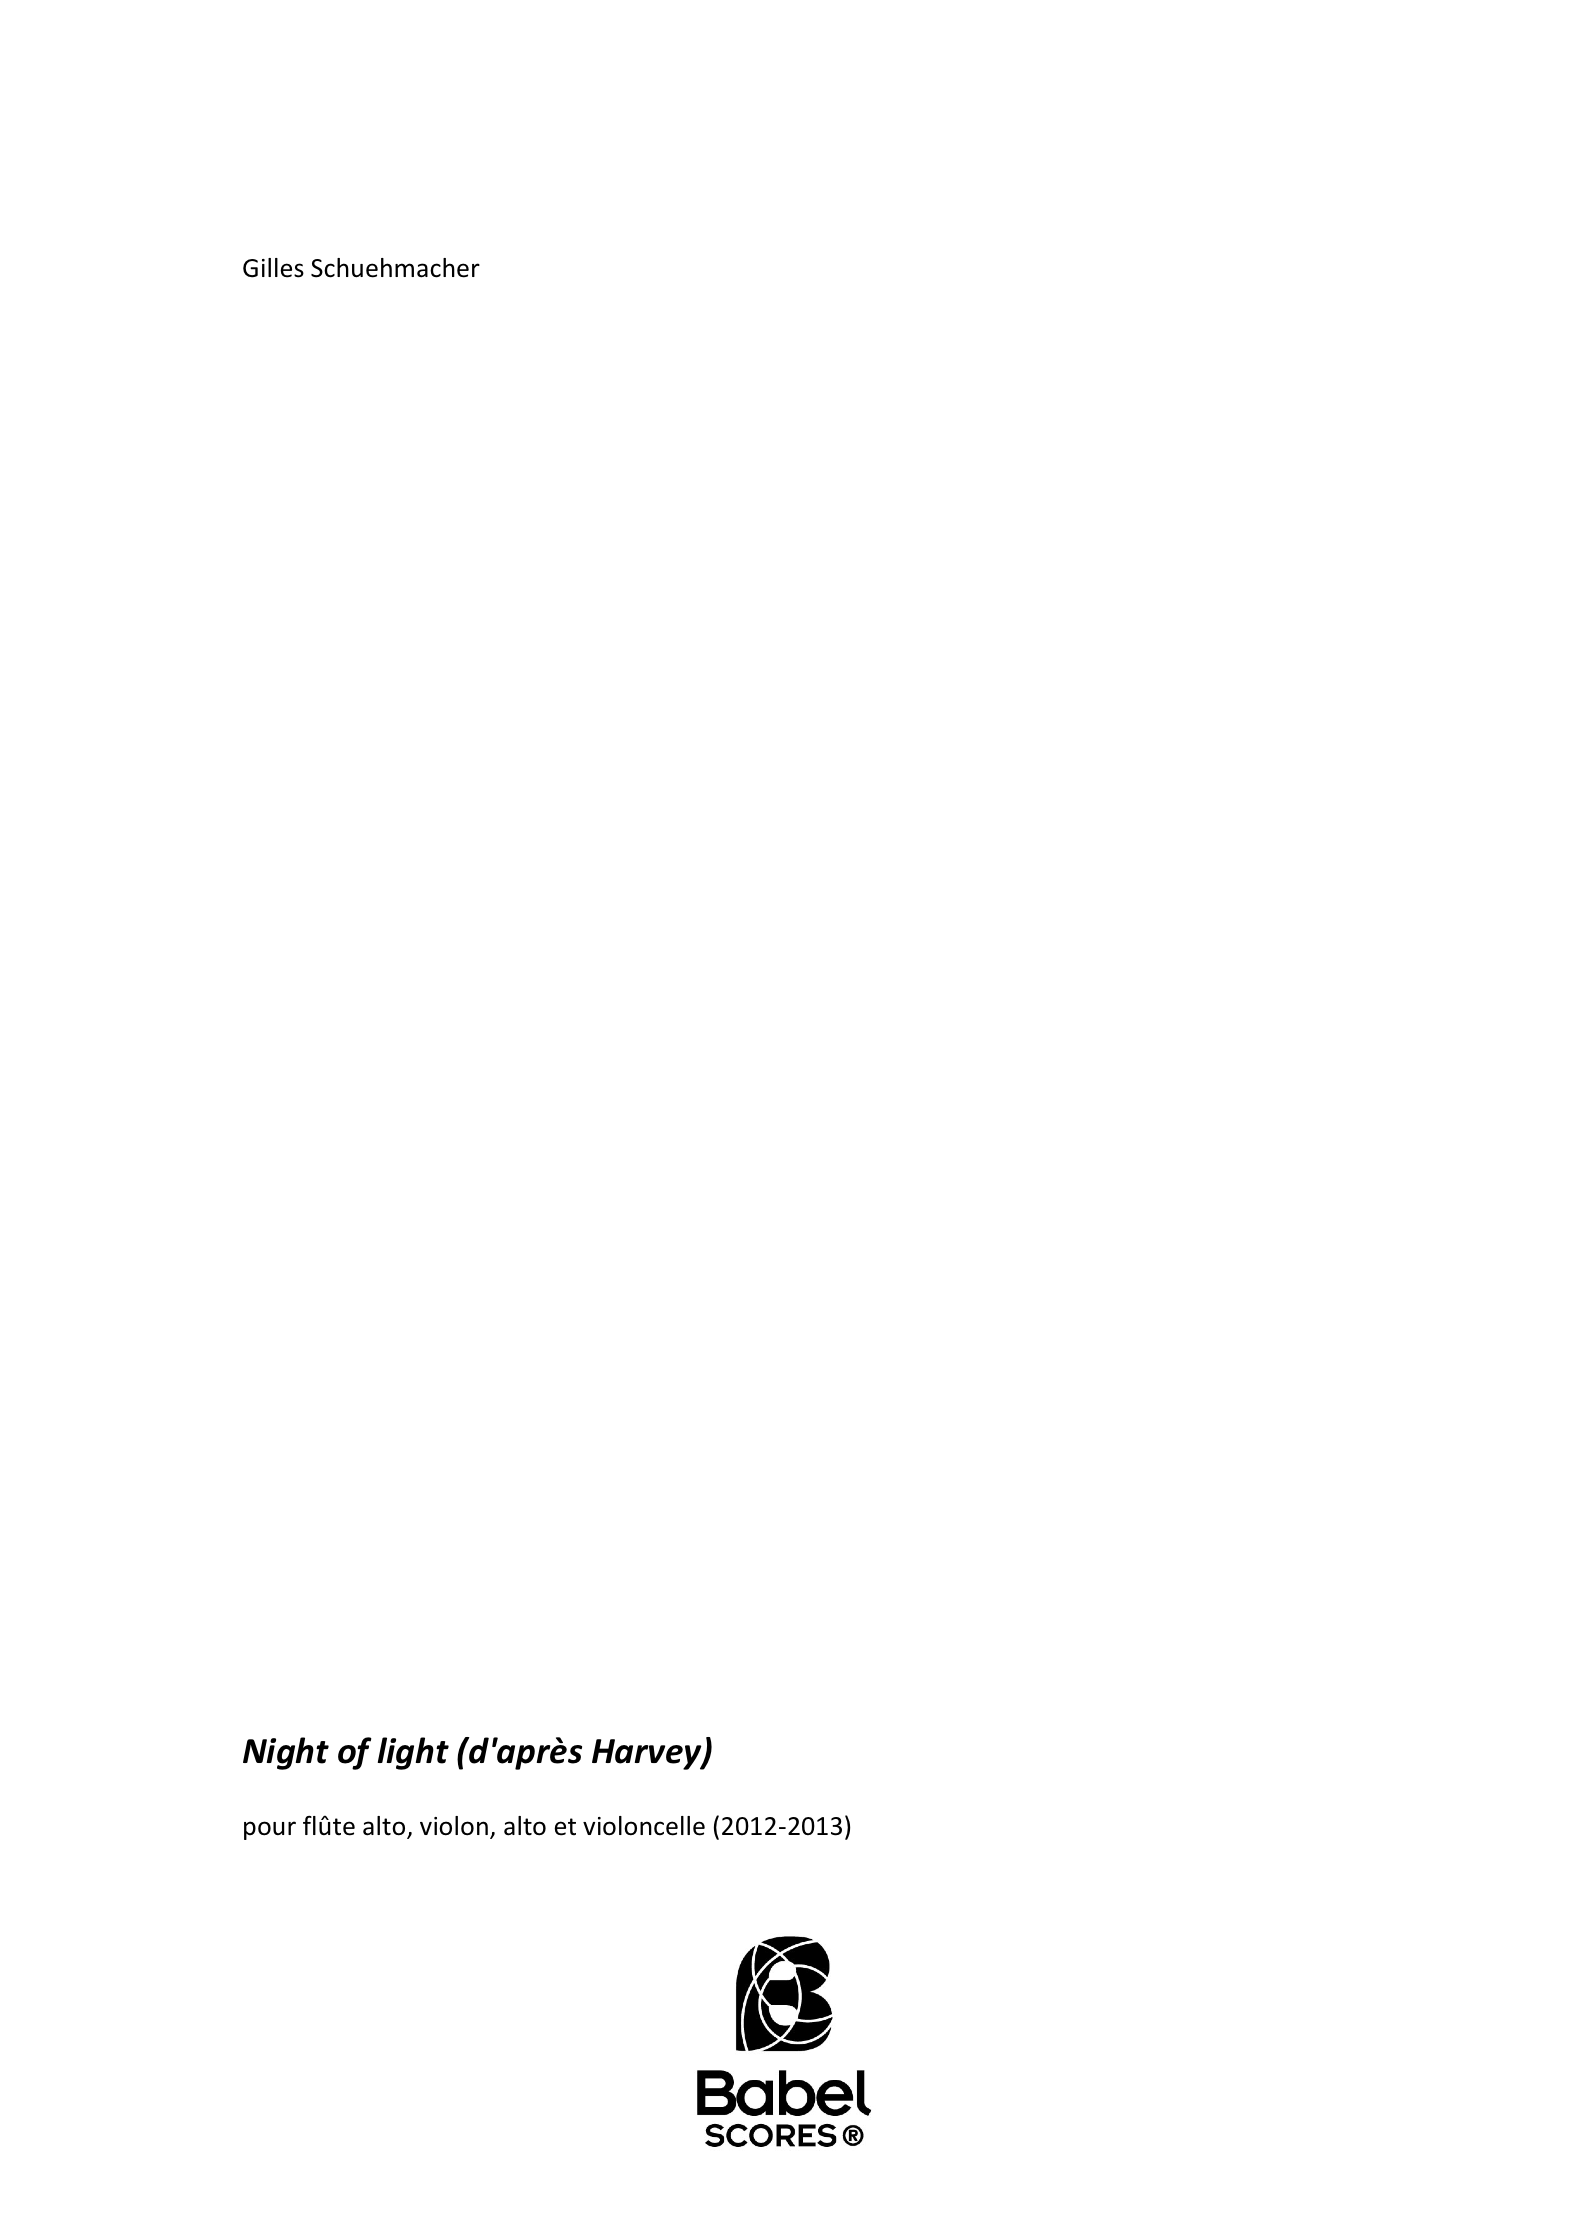 night of light schuehmacher A4 z pdf